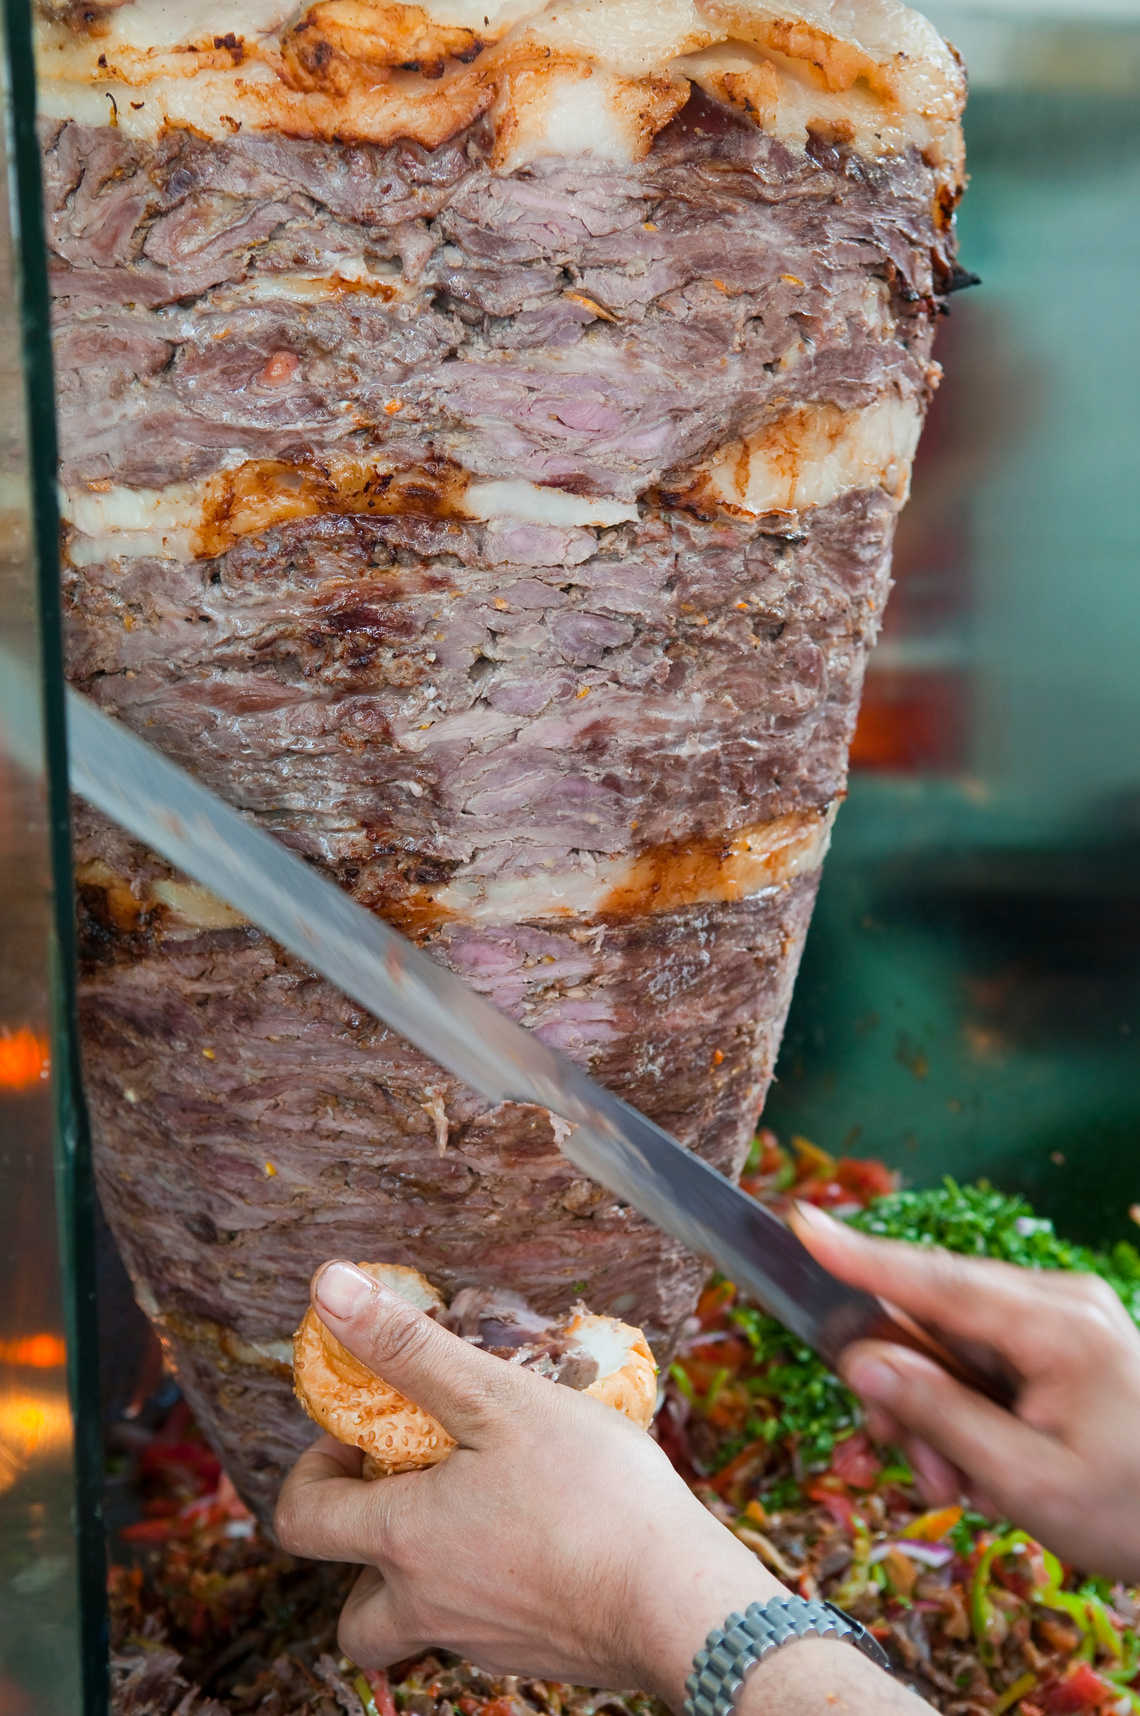 Shawarma meat being cut for sandwich